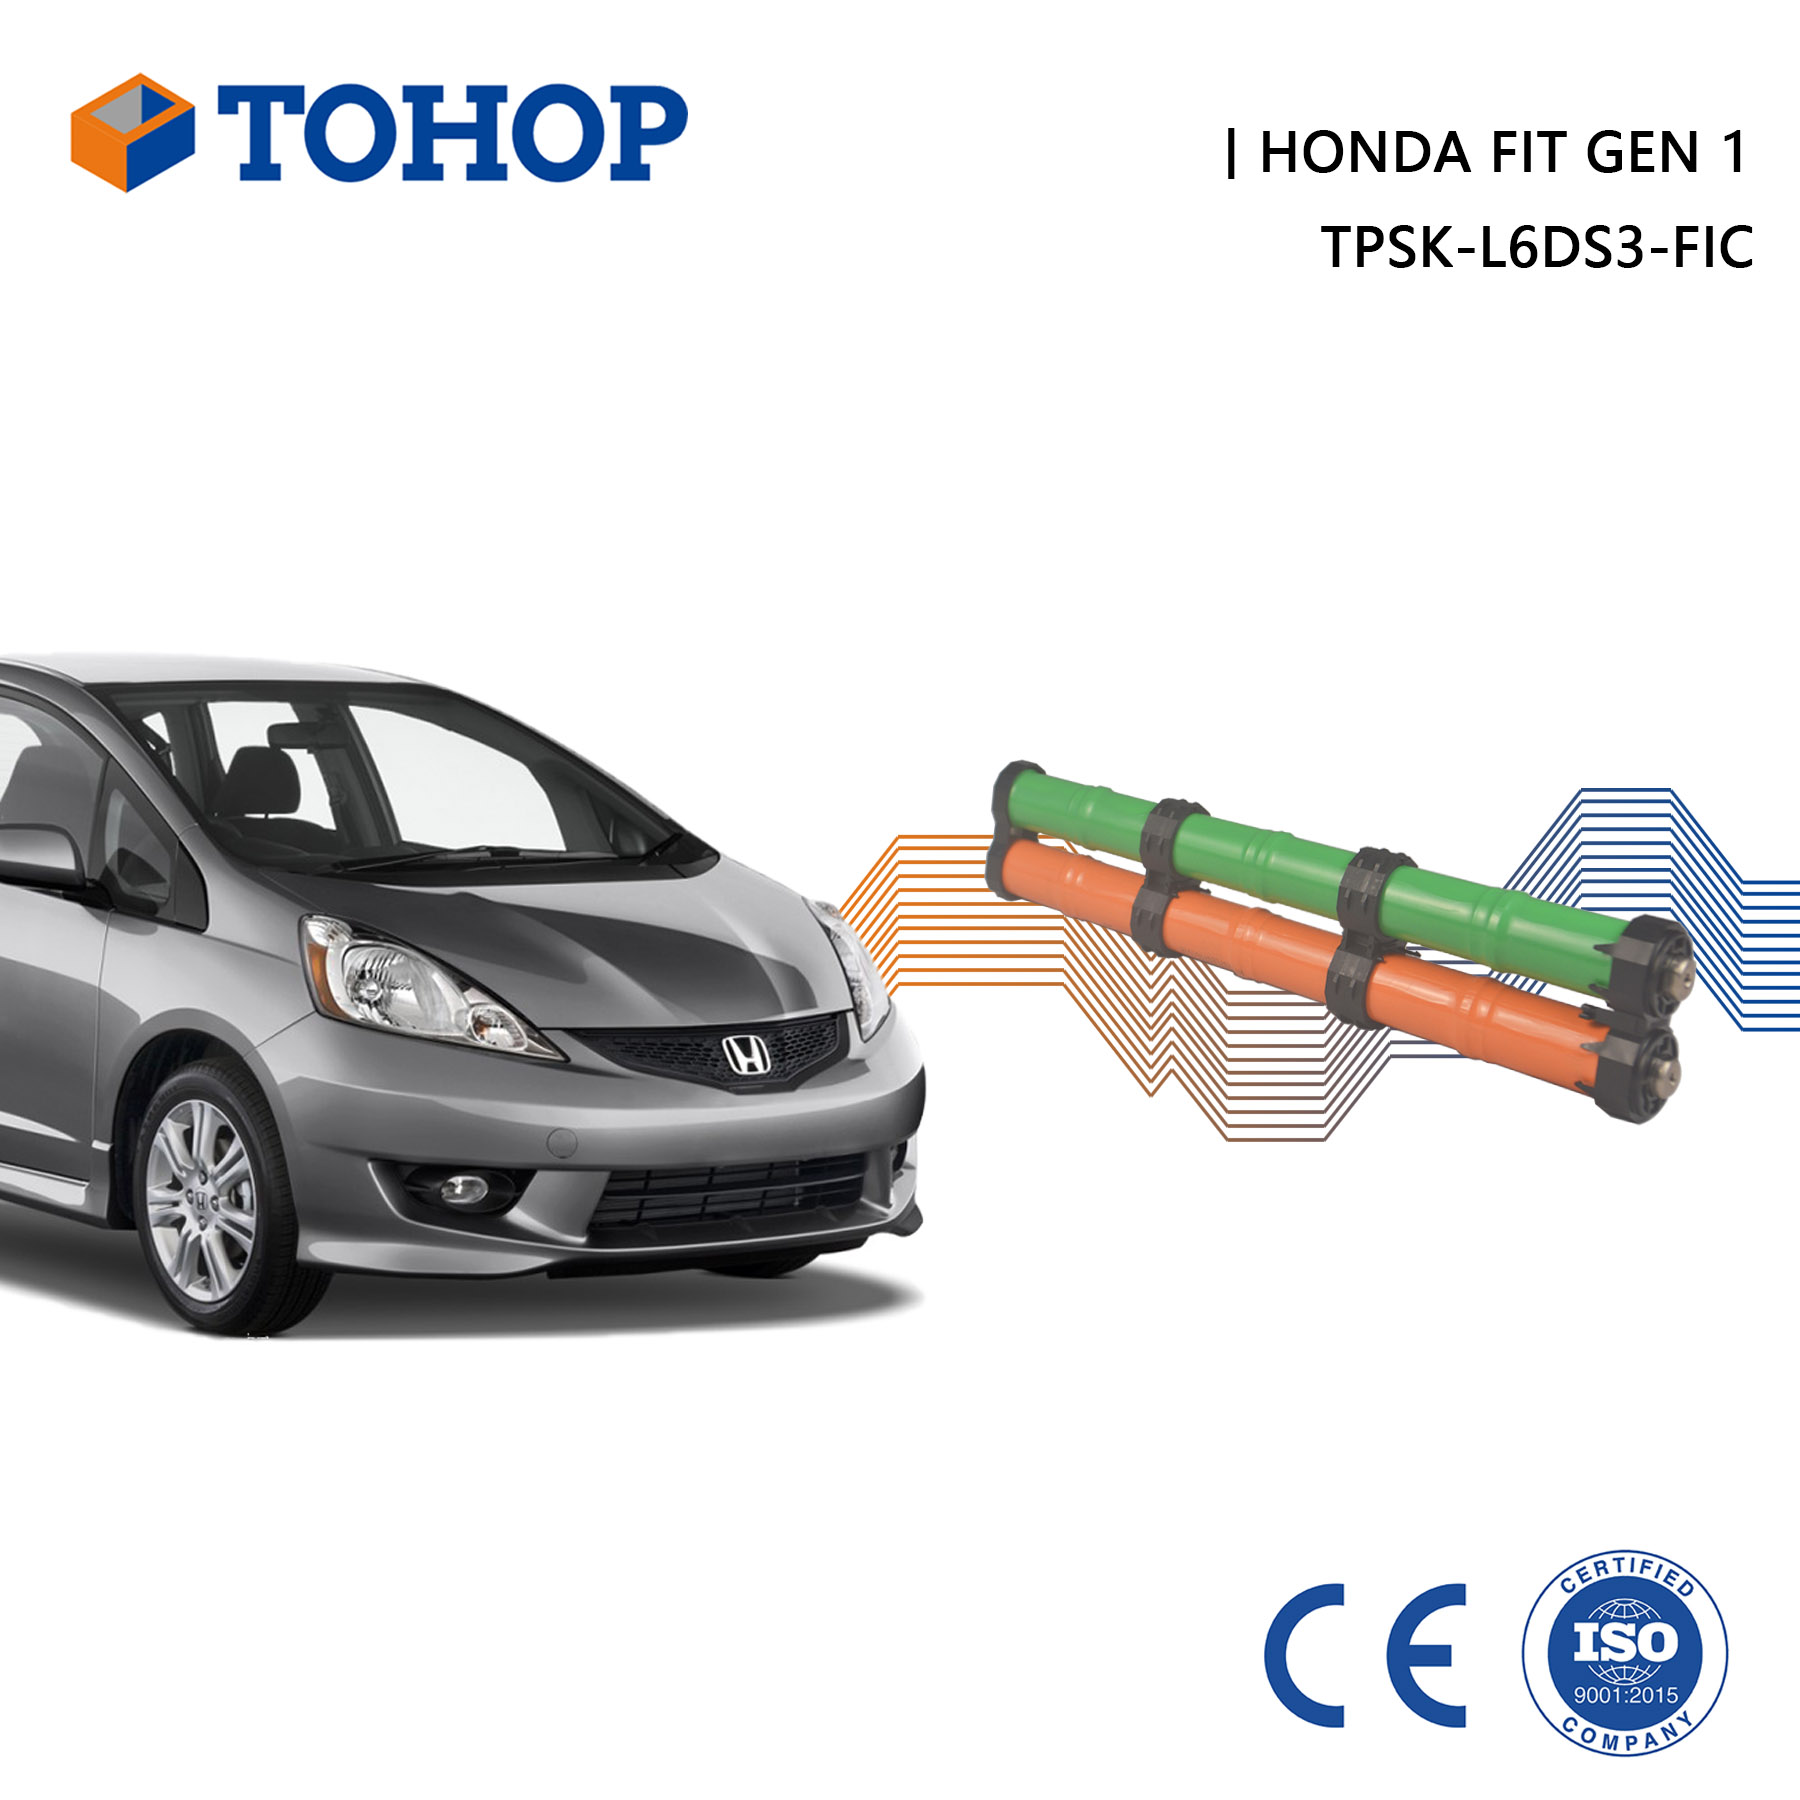 Paquete de baterías híbridas Honda Fit Honda Gen 1 Cylindrical para vehículo